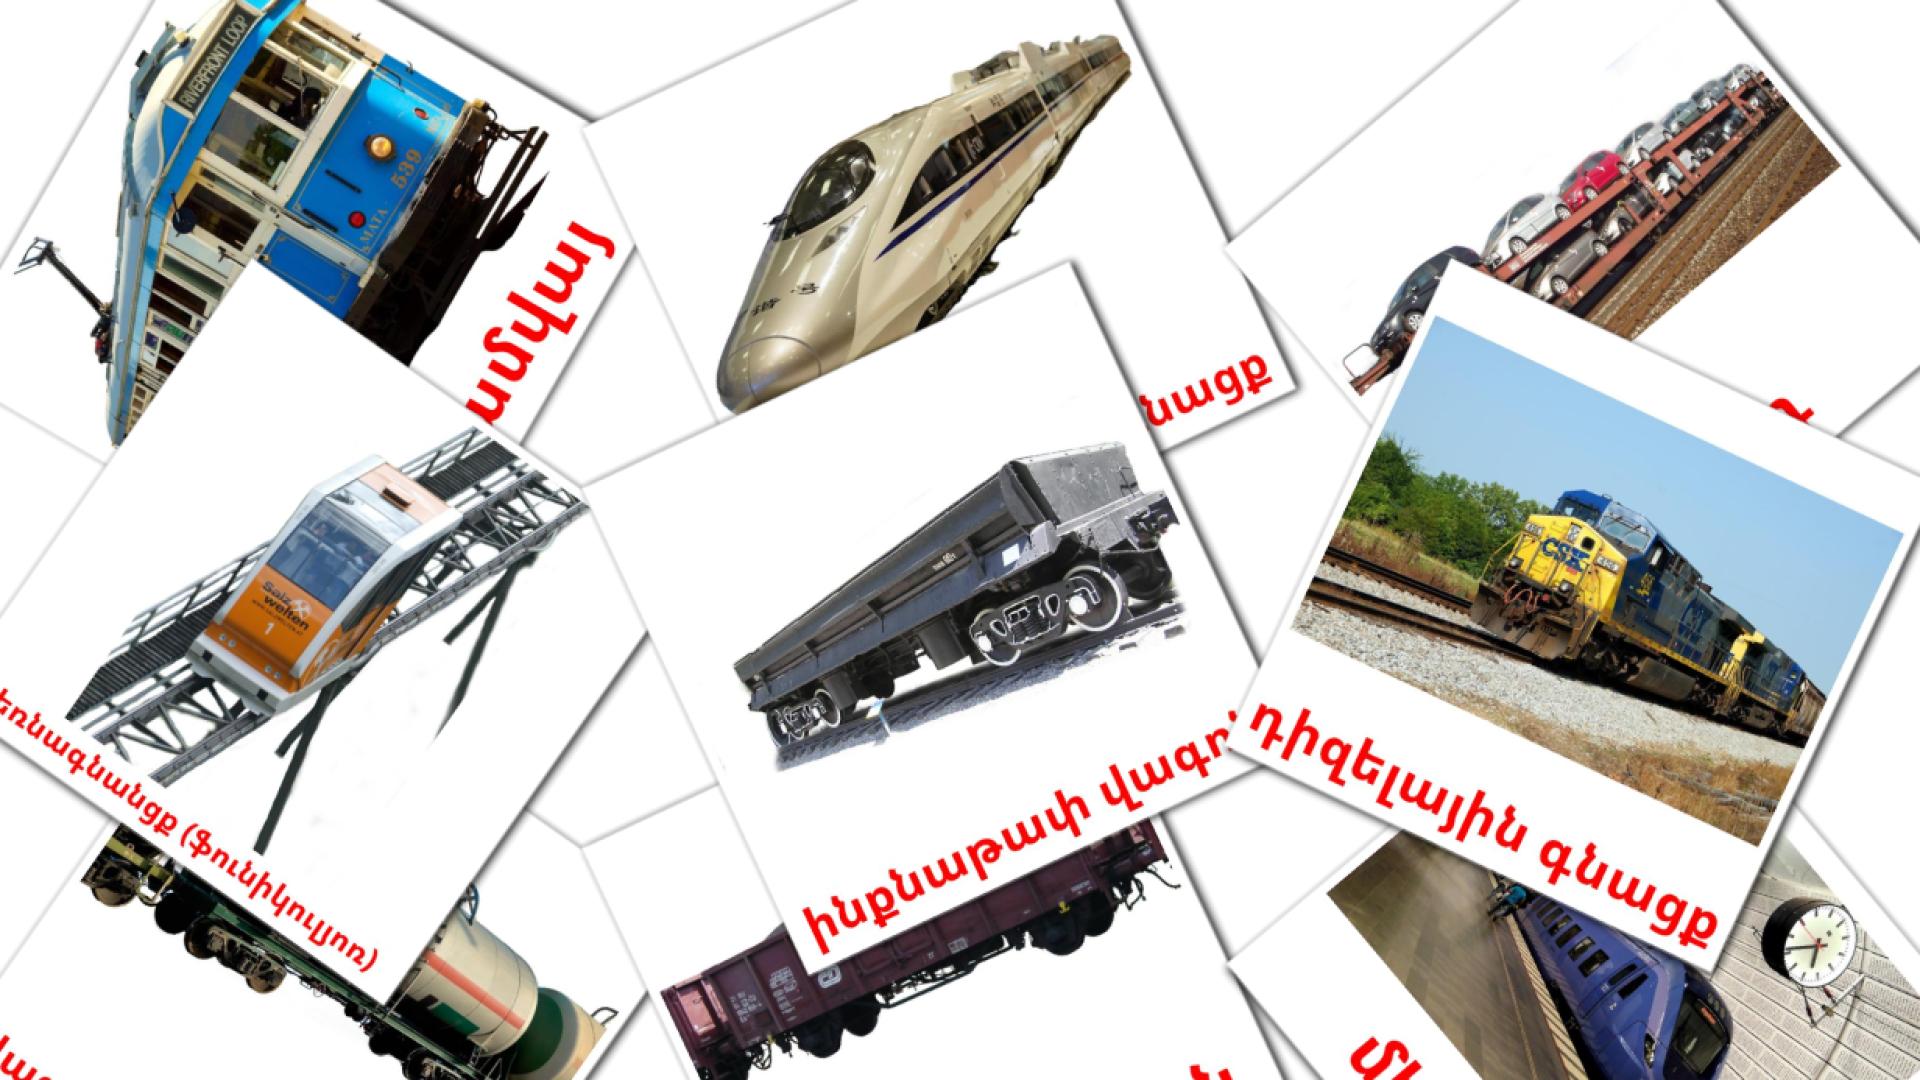 Rail transport - armenian vocabulary cards